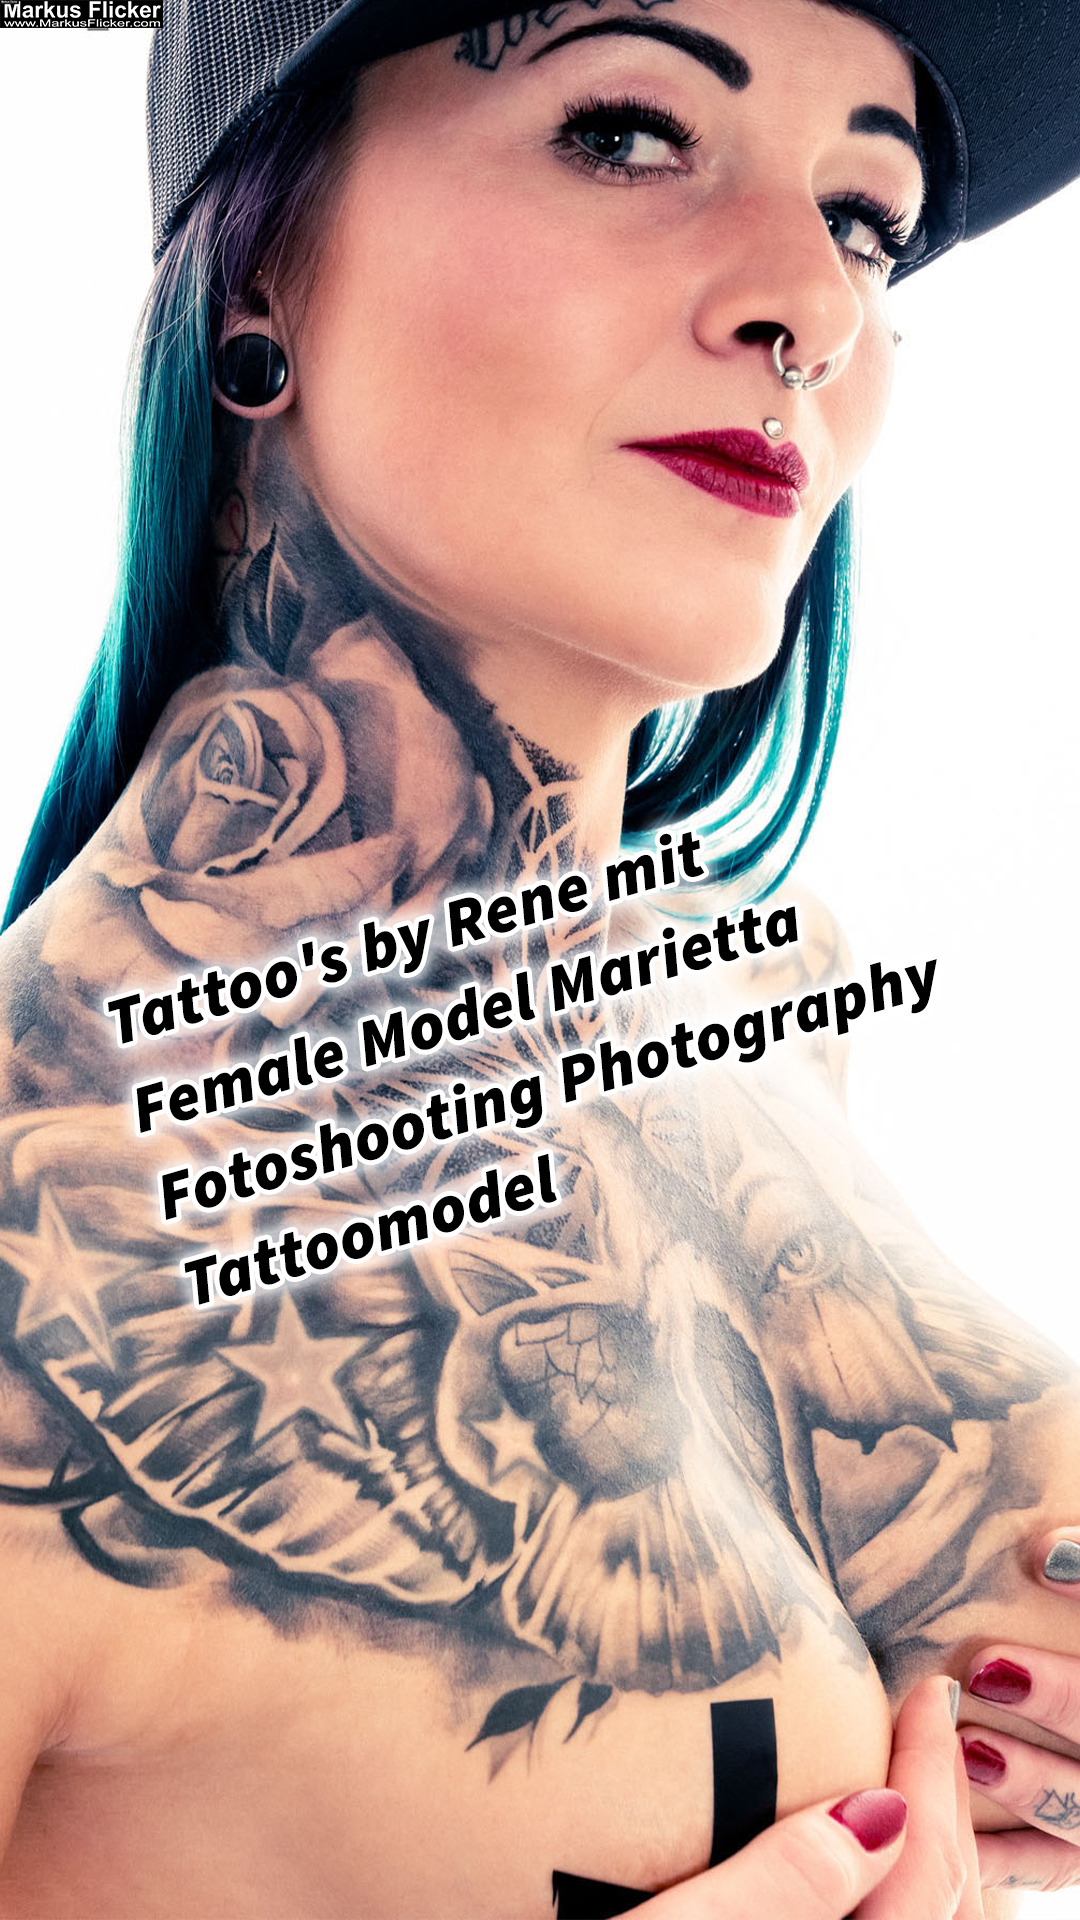 Tattoo’s by Rene mit Female Model Marietta Fotoshooting Photography Tattoomodel Brustkorb und Hals